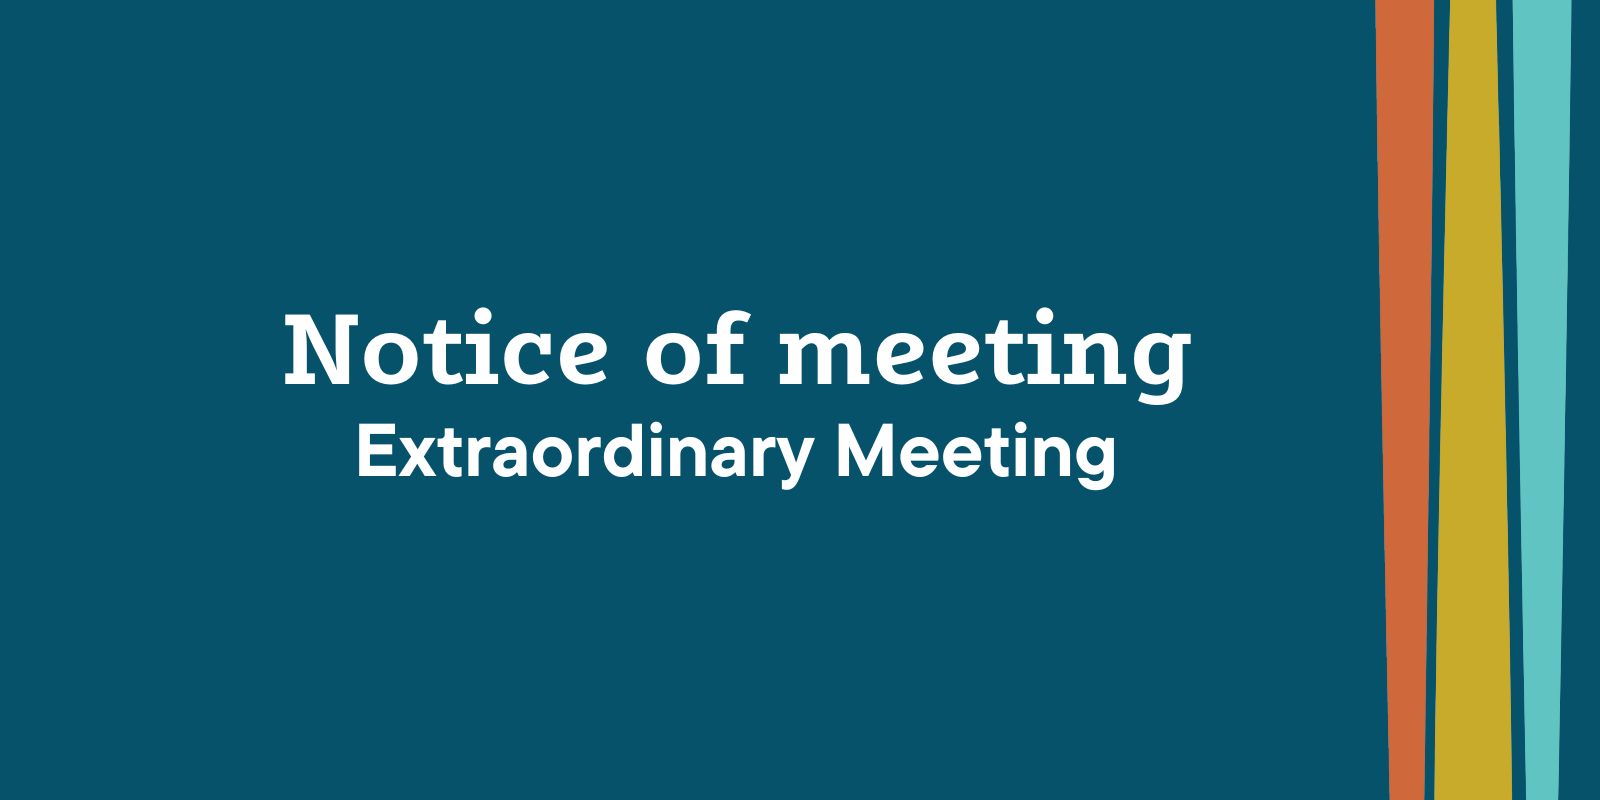 Extraordinary Meeting banner image